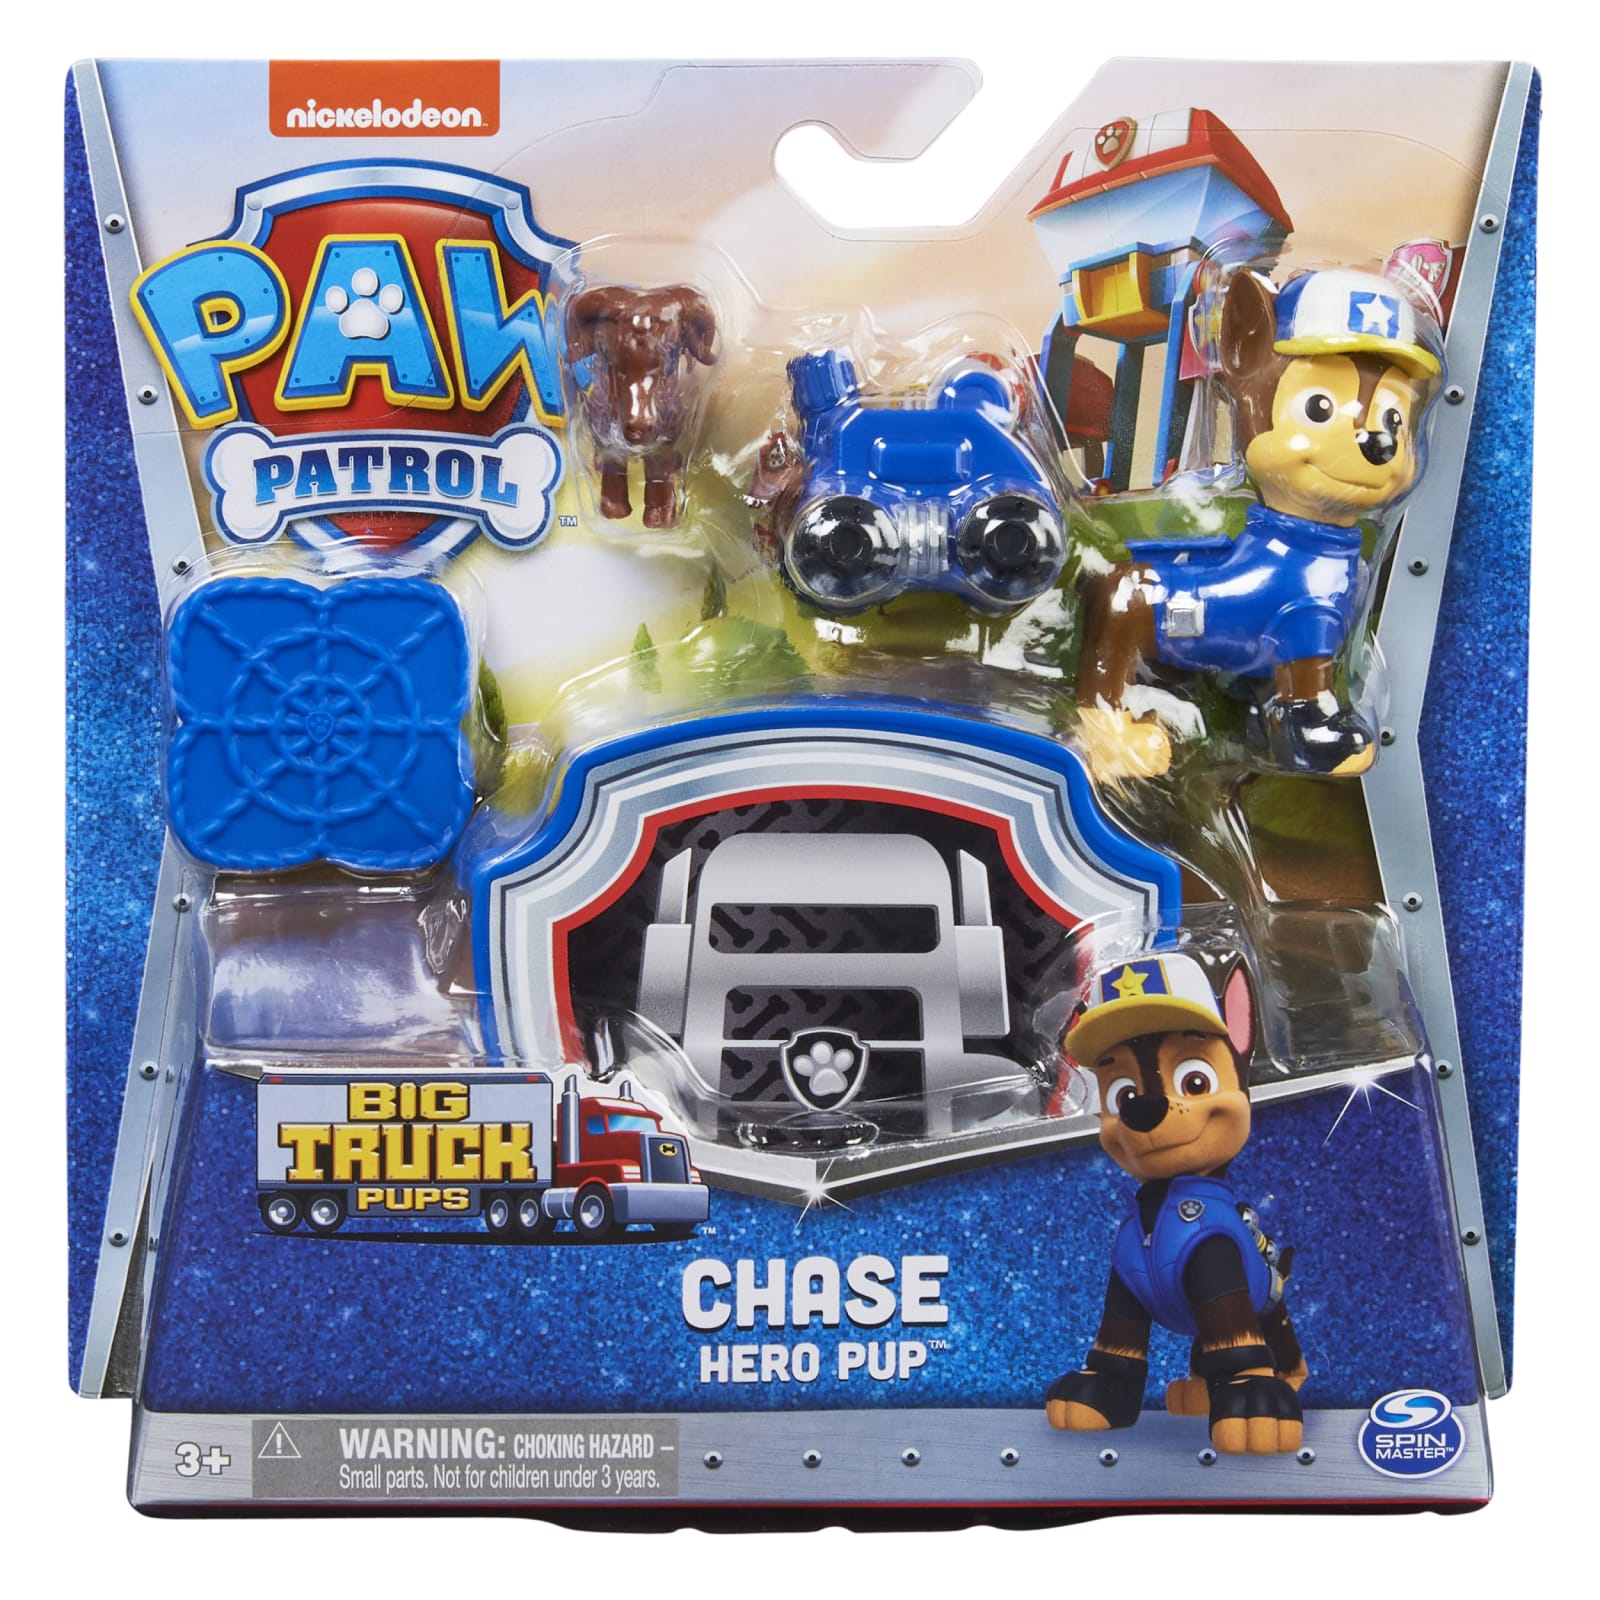 PAW Patrol Chase Interactive Plush Toy by Paw Patrol at Fleet Farm